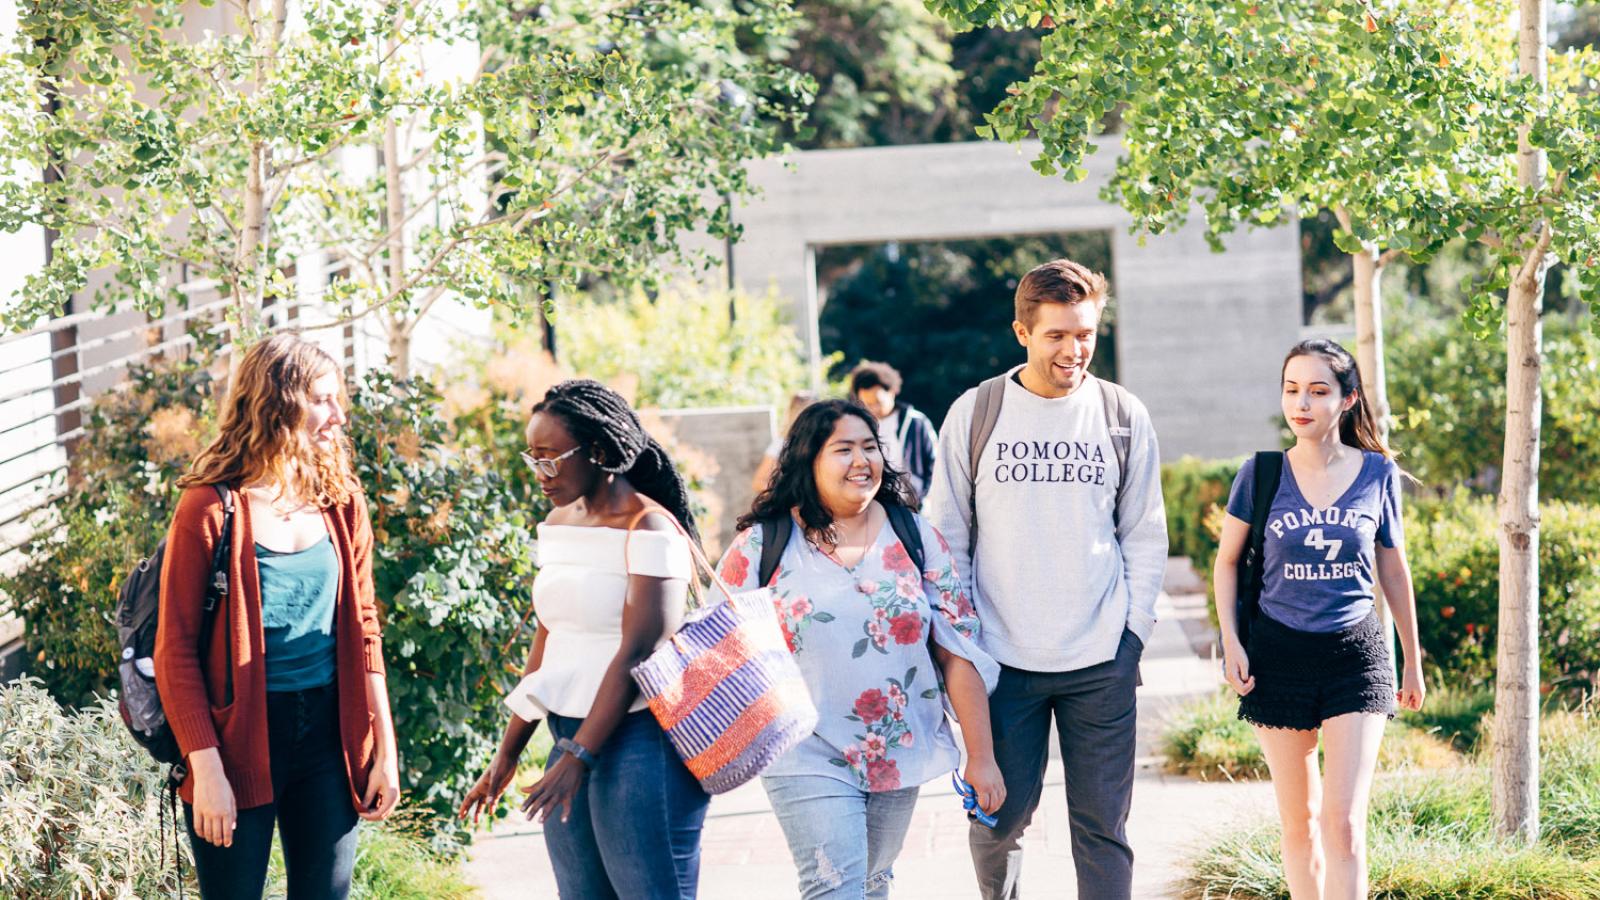 Pomona College Students Walking